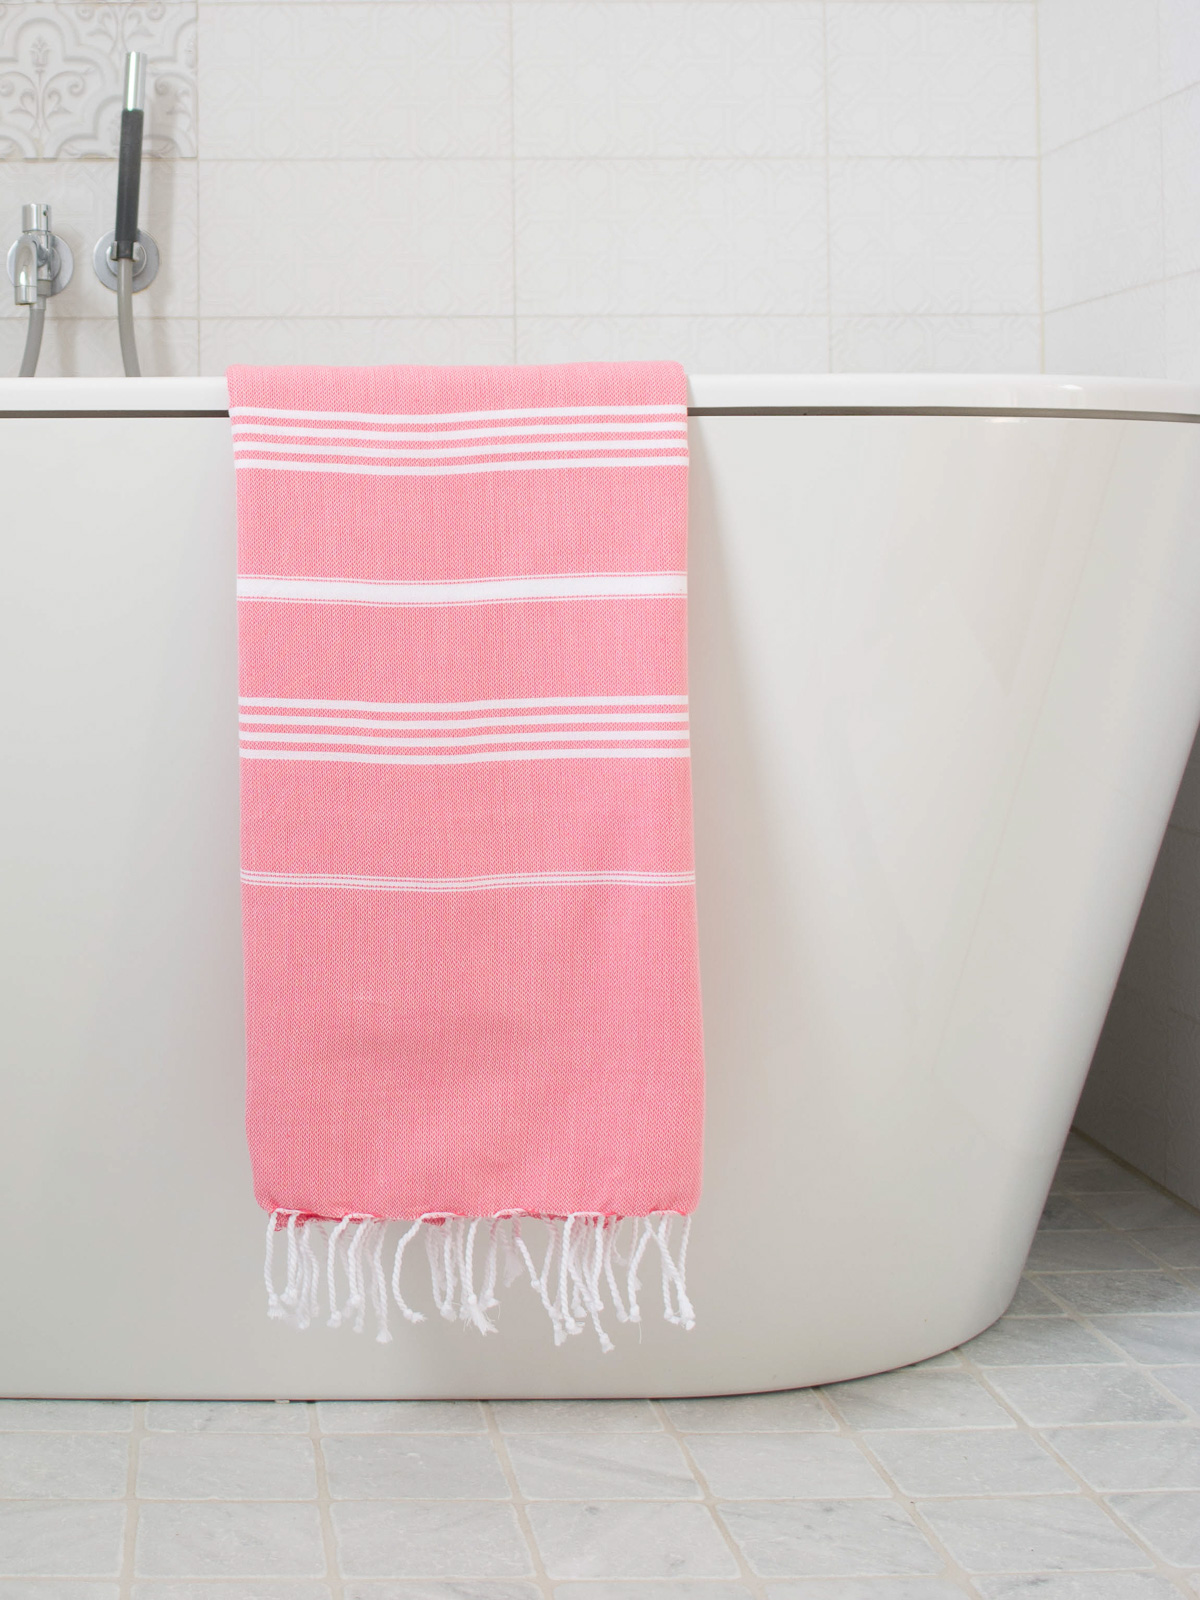 hammam towel candy pink/white